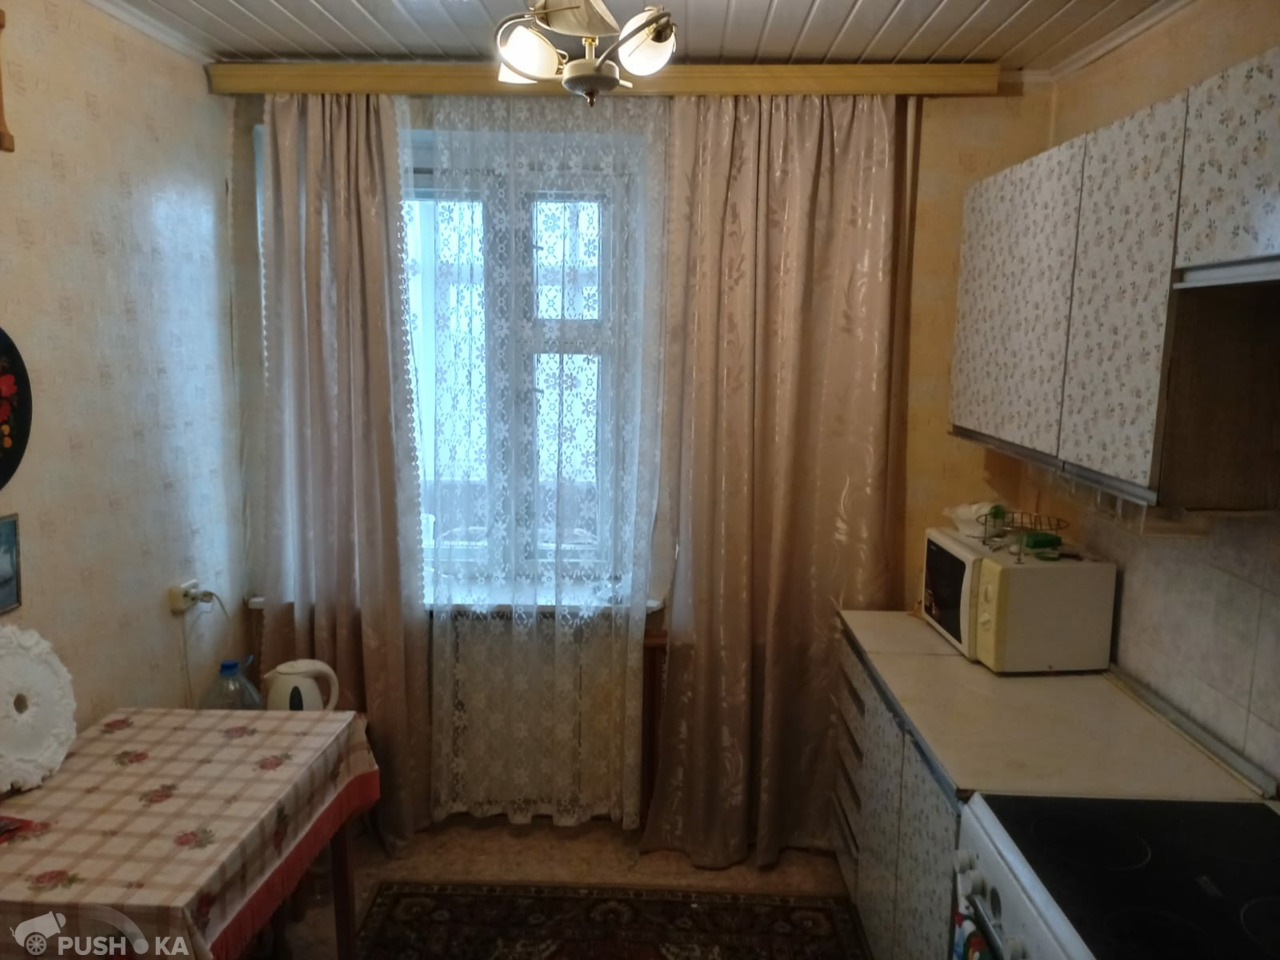 Продаётся 2-комнатная квартира 48.0 кв.м. этаж 8/10 за 3 350 000 руб 